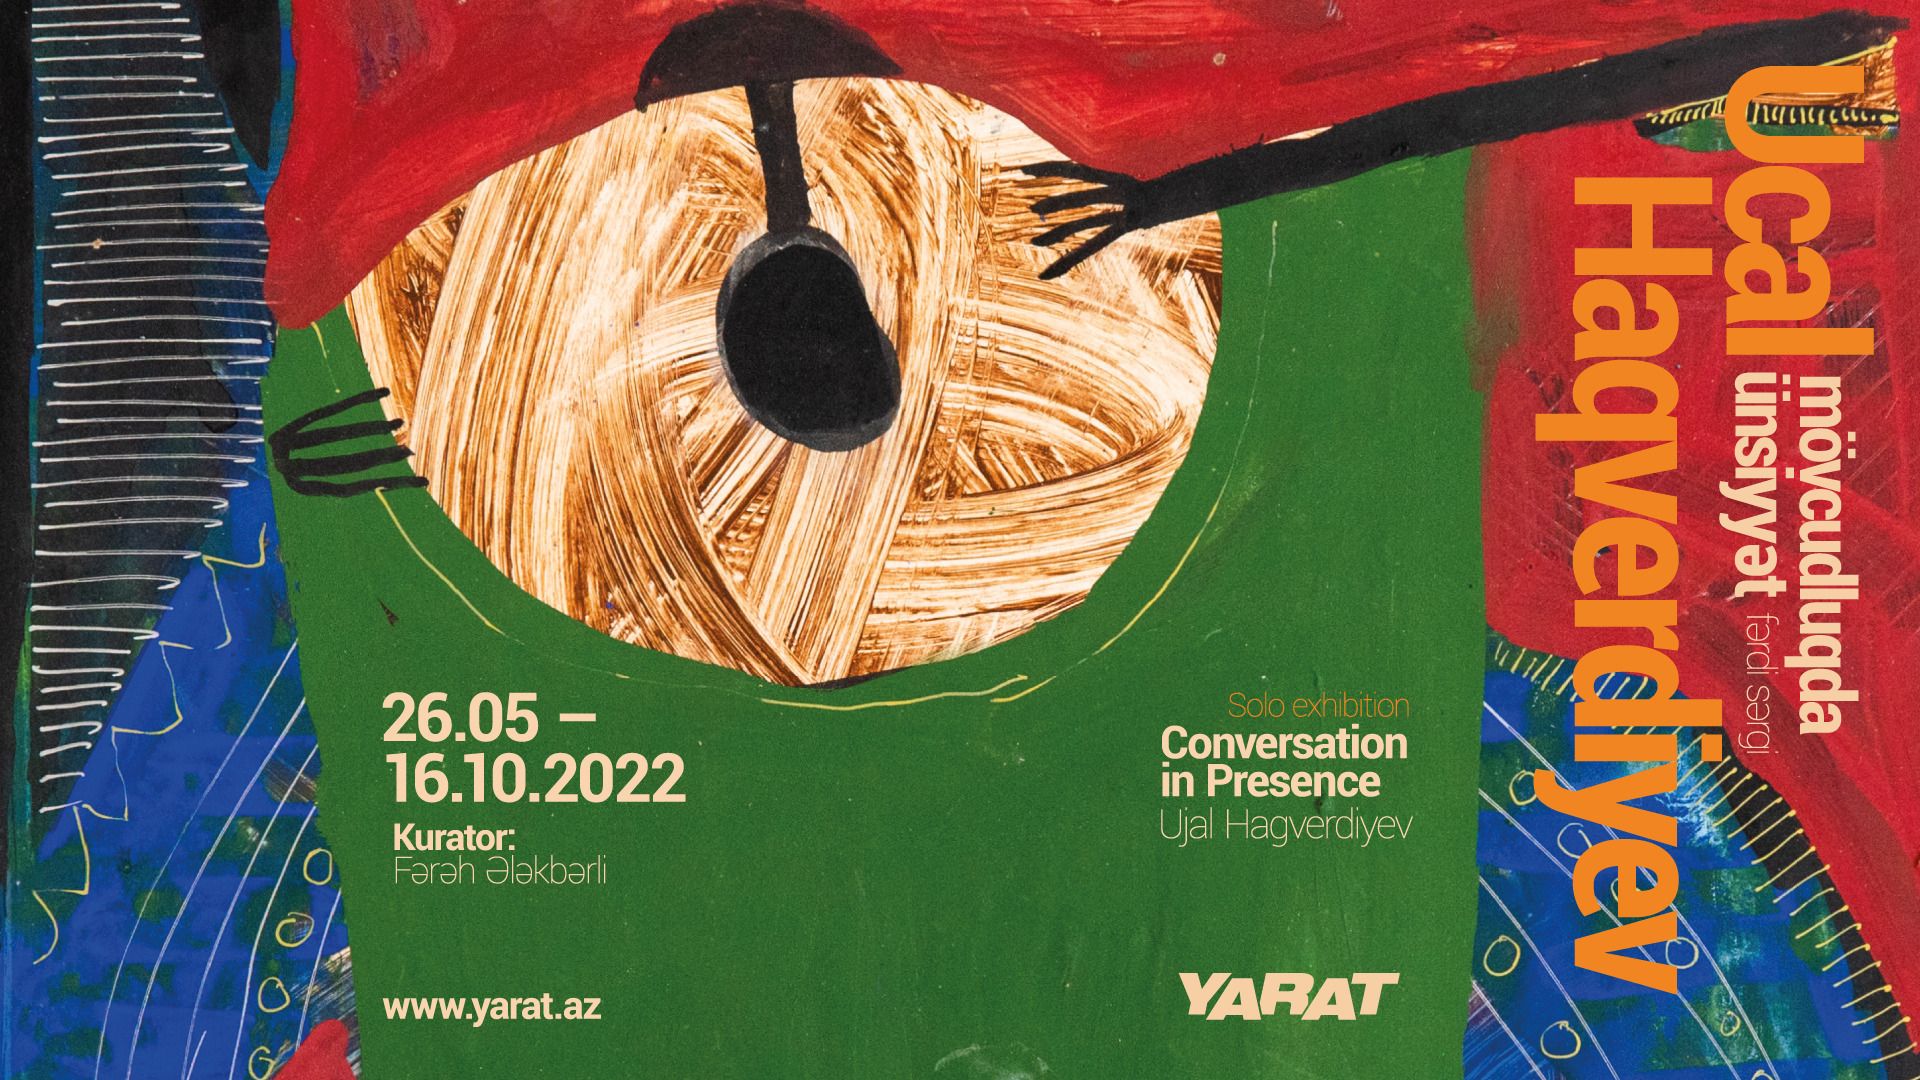 Ujal Hagverdiyev's art to be shown at YARAT